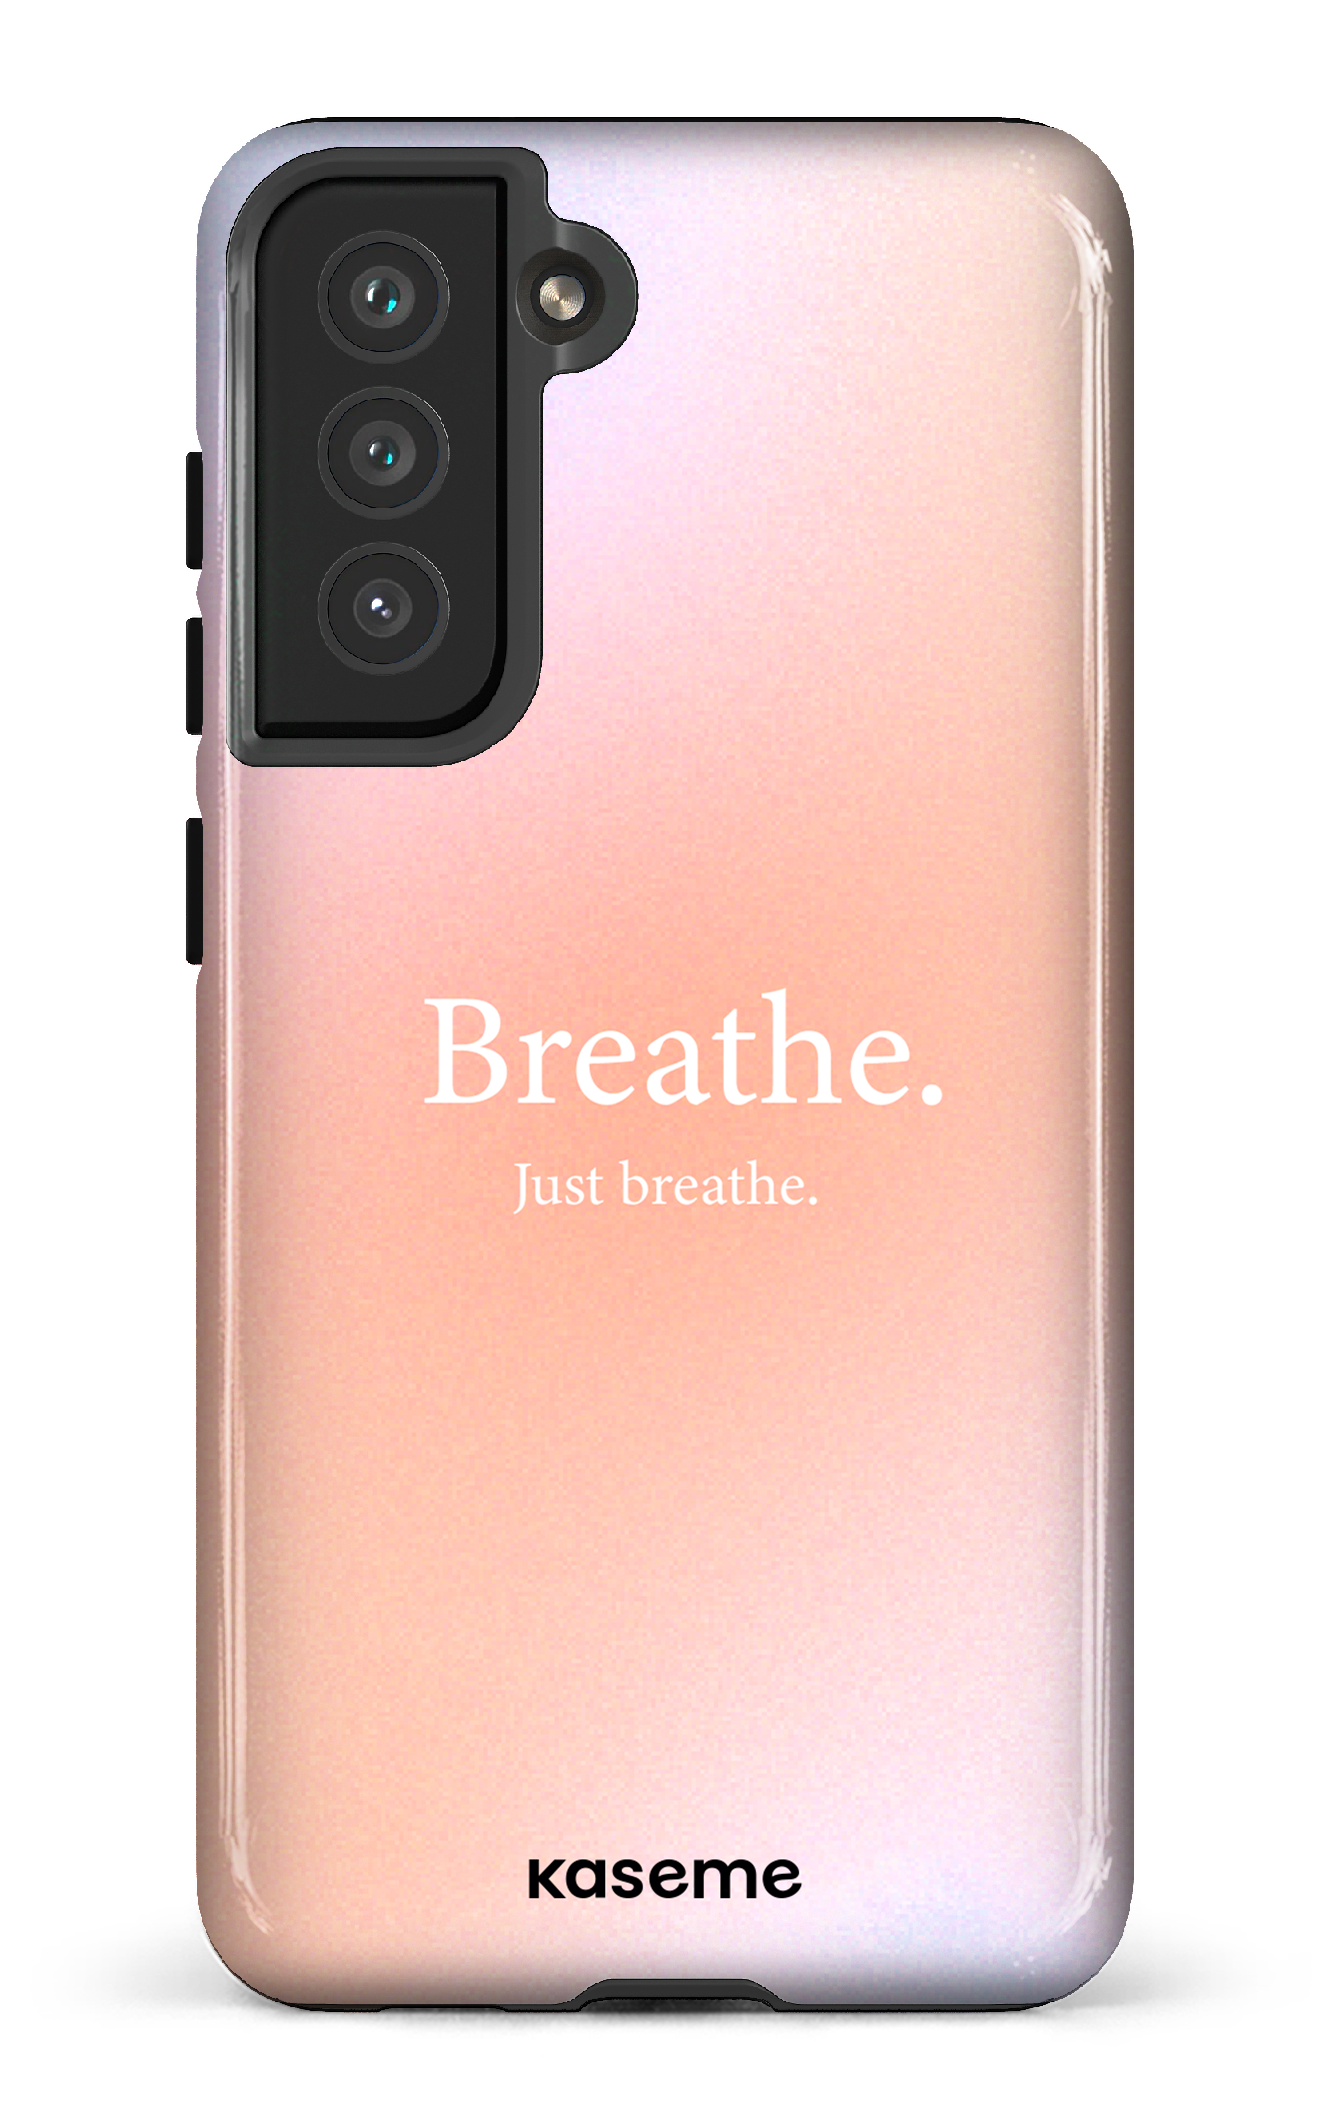 Just breathe - Galaxy S21 FE